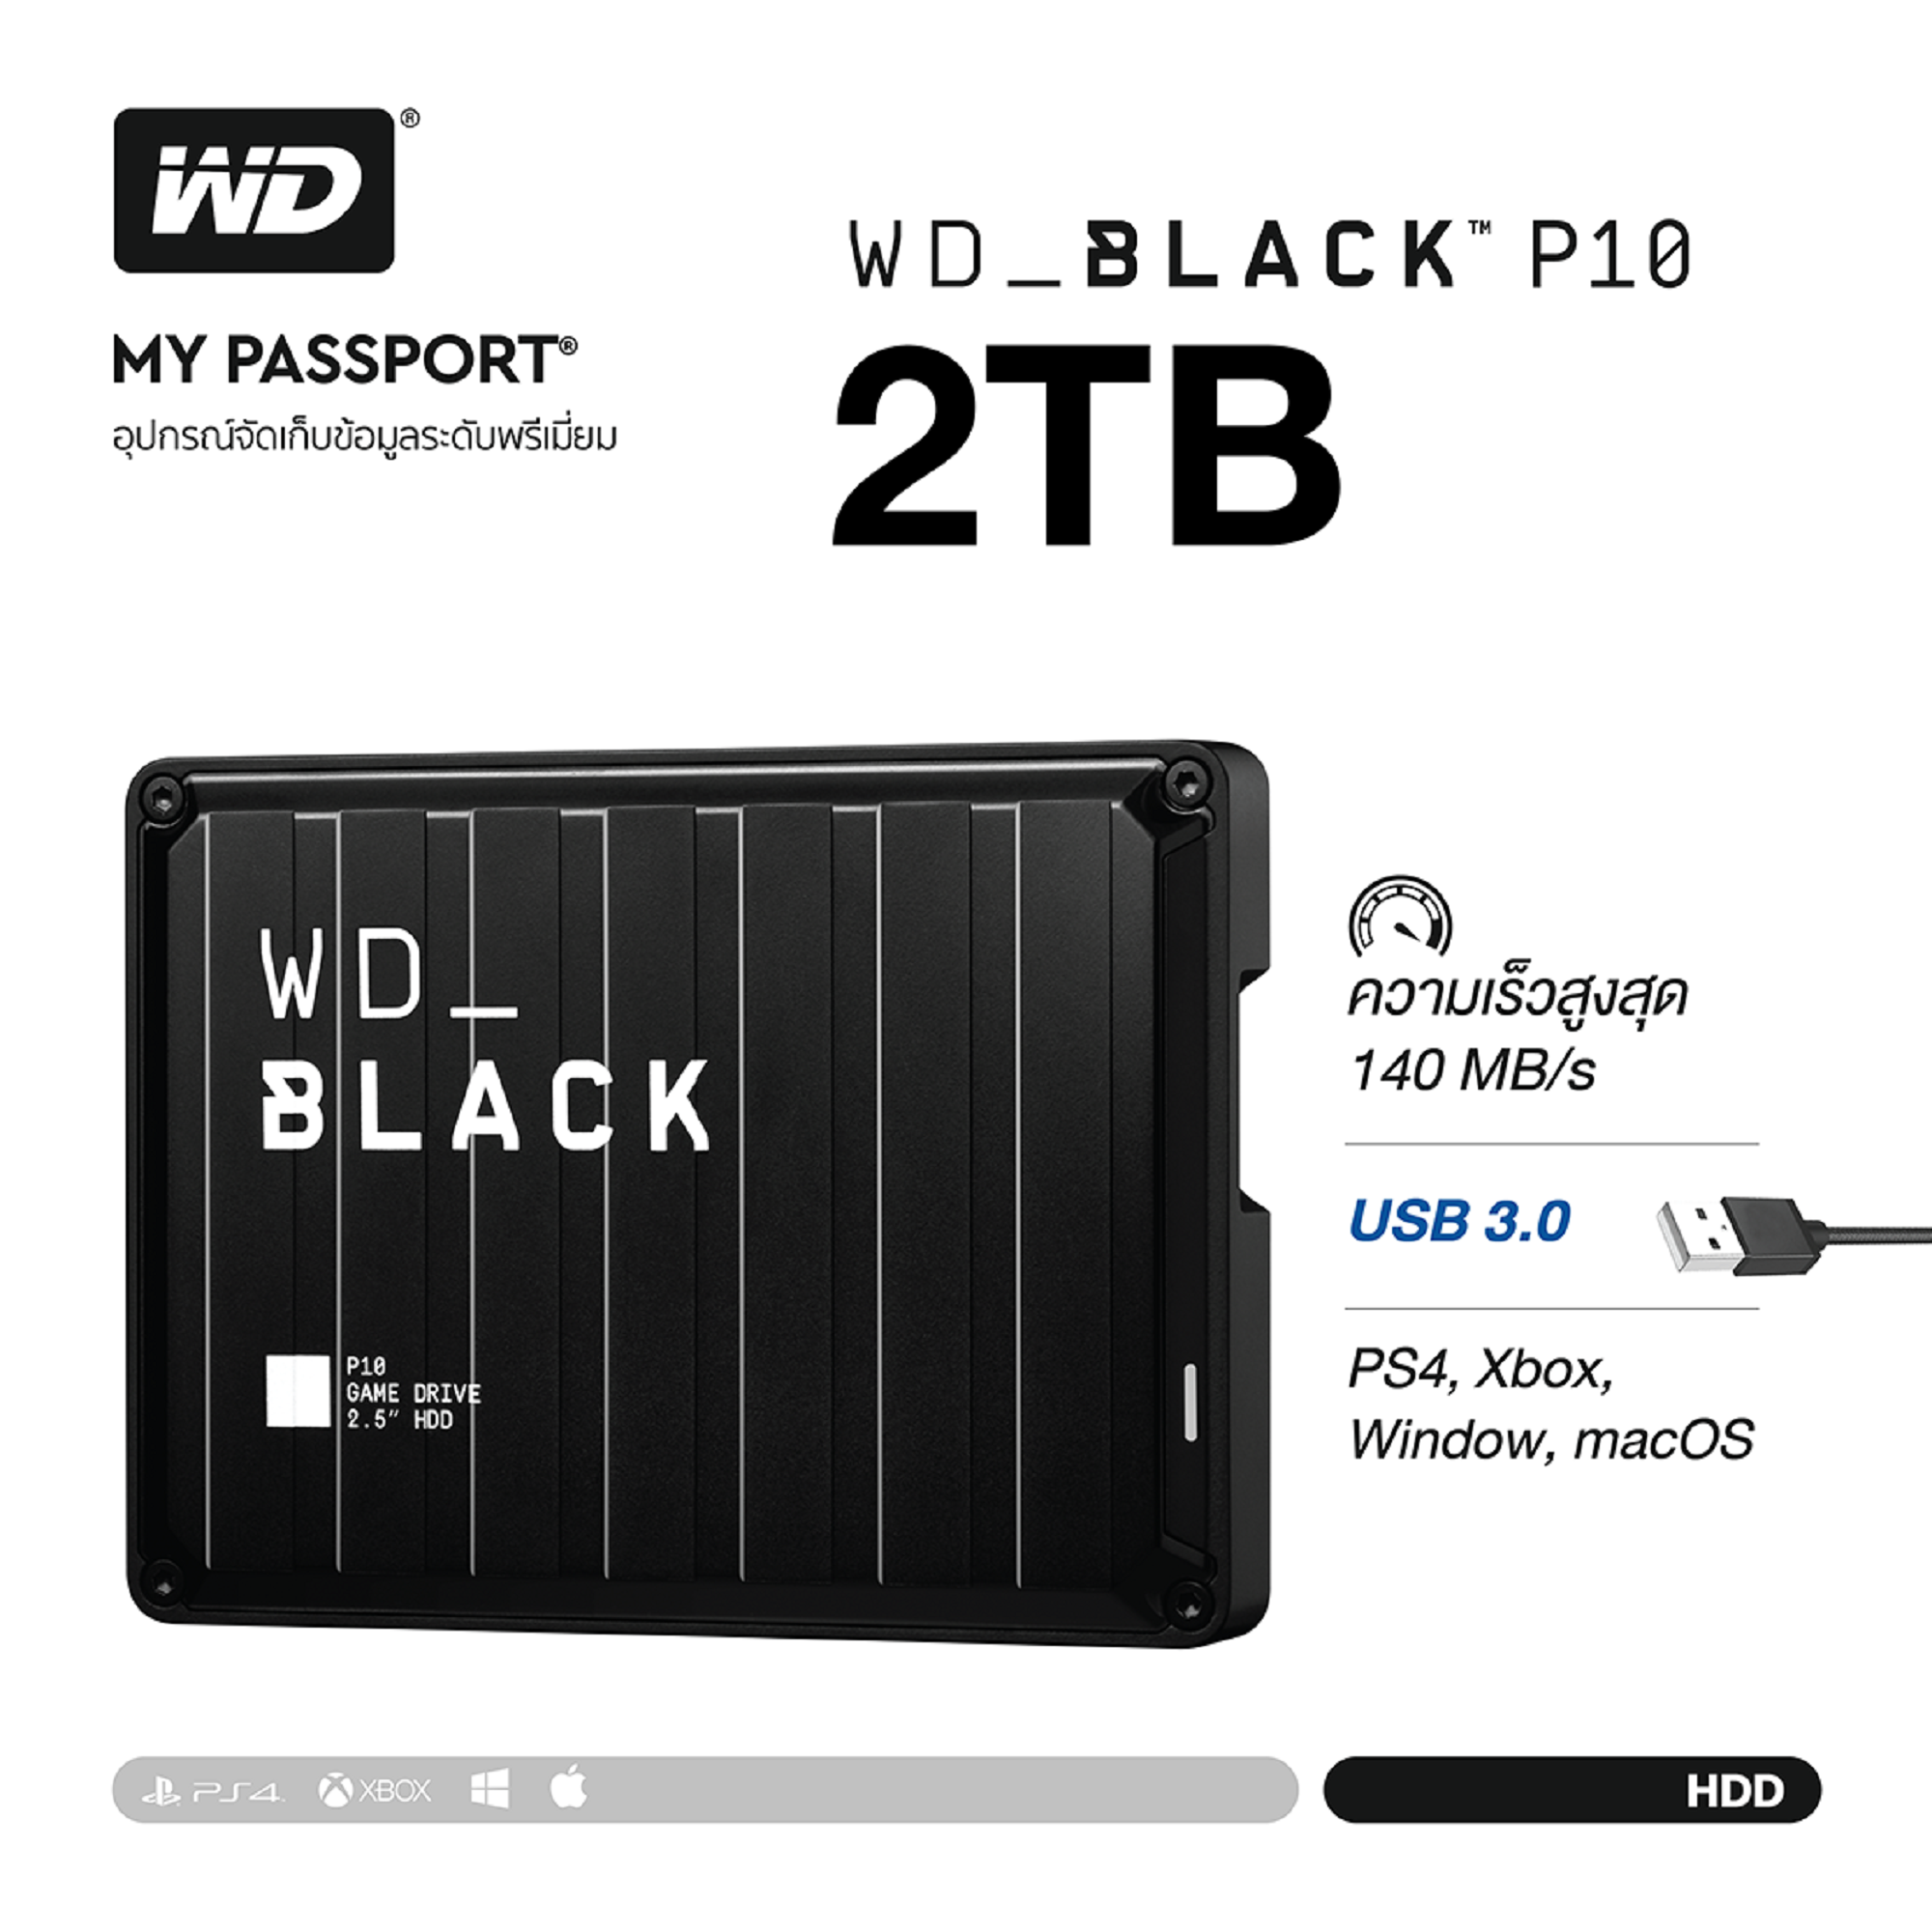 WD Black P10 2TB, USB 3.0, PS4 Xbox Window macOS Compatible, Speed up to 140 MB/s, HDD 2.5 ( WDBA2W0020BBK-WESN  ) ( ฮาร์ดดิสพกพา Internal Harddisk Harddrive )